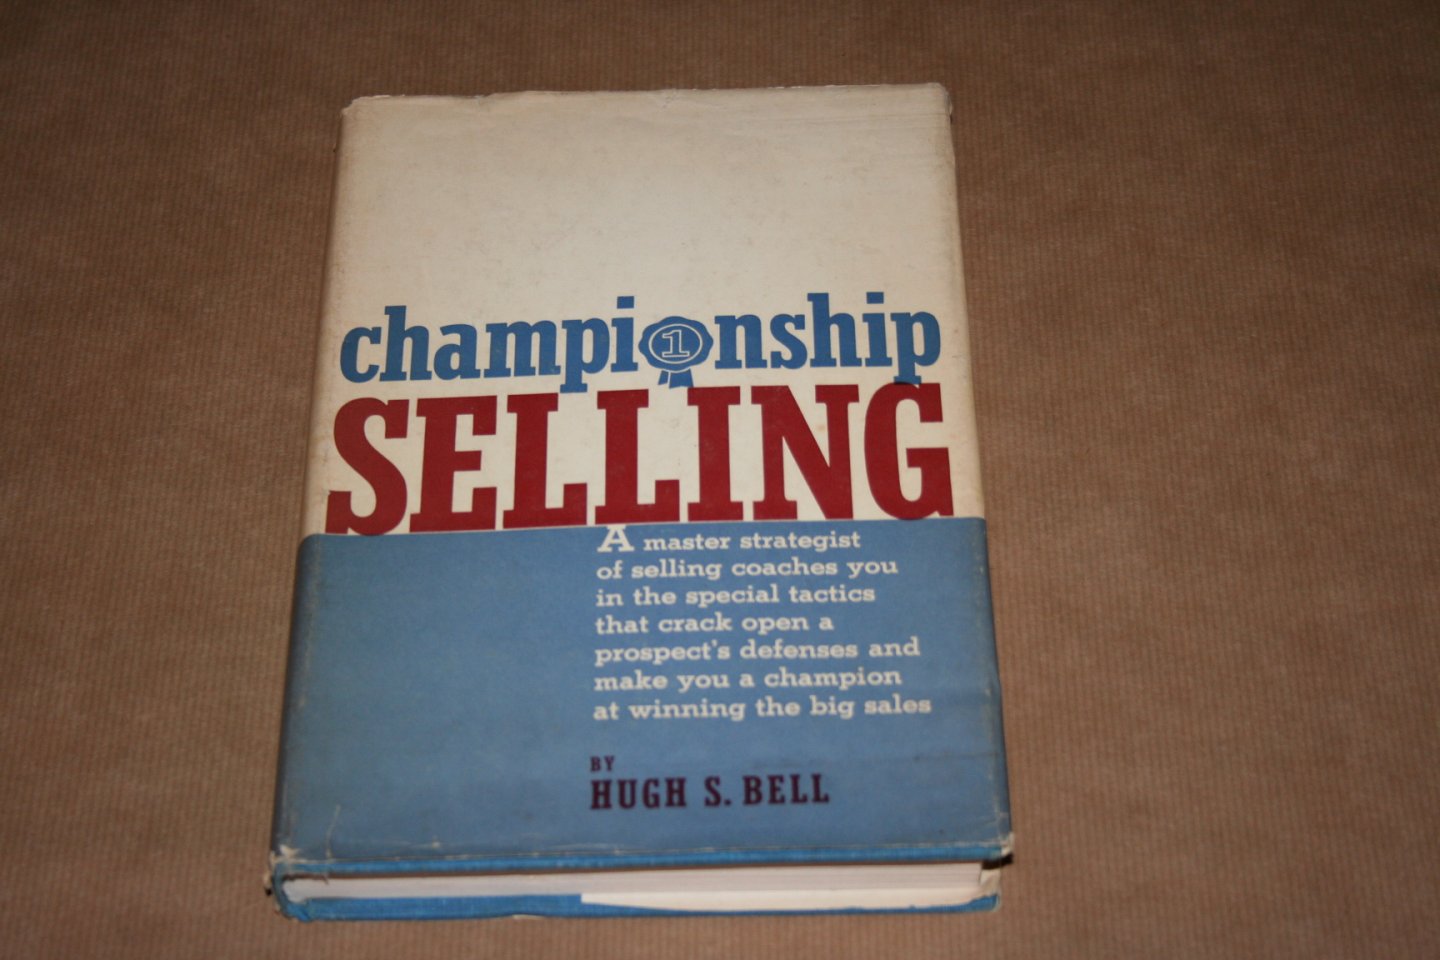 Hugh S. Bell - Championship selling